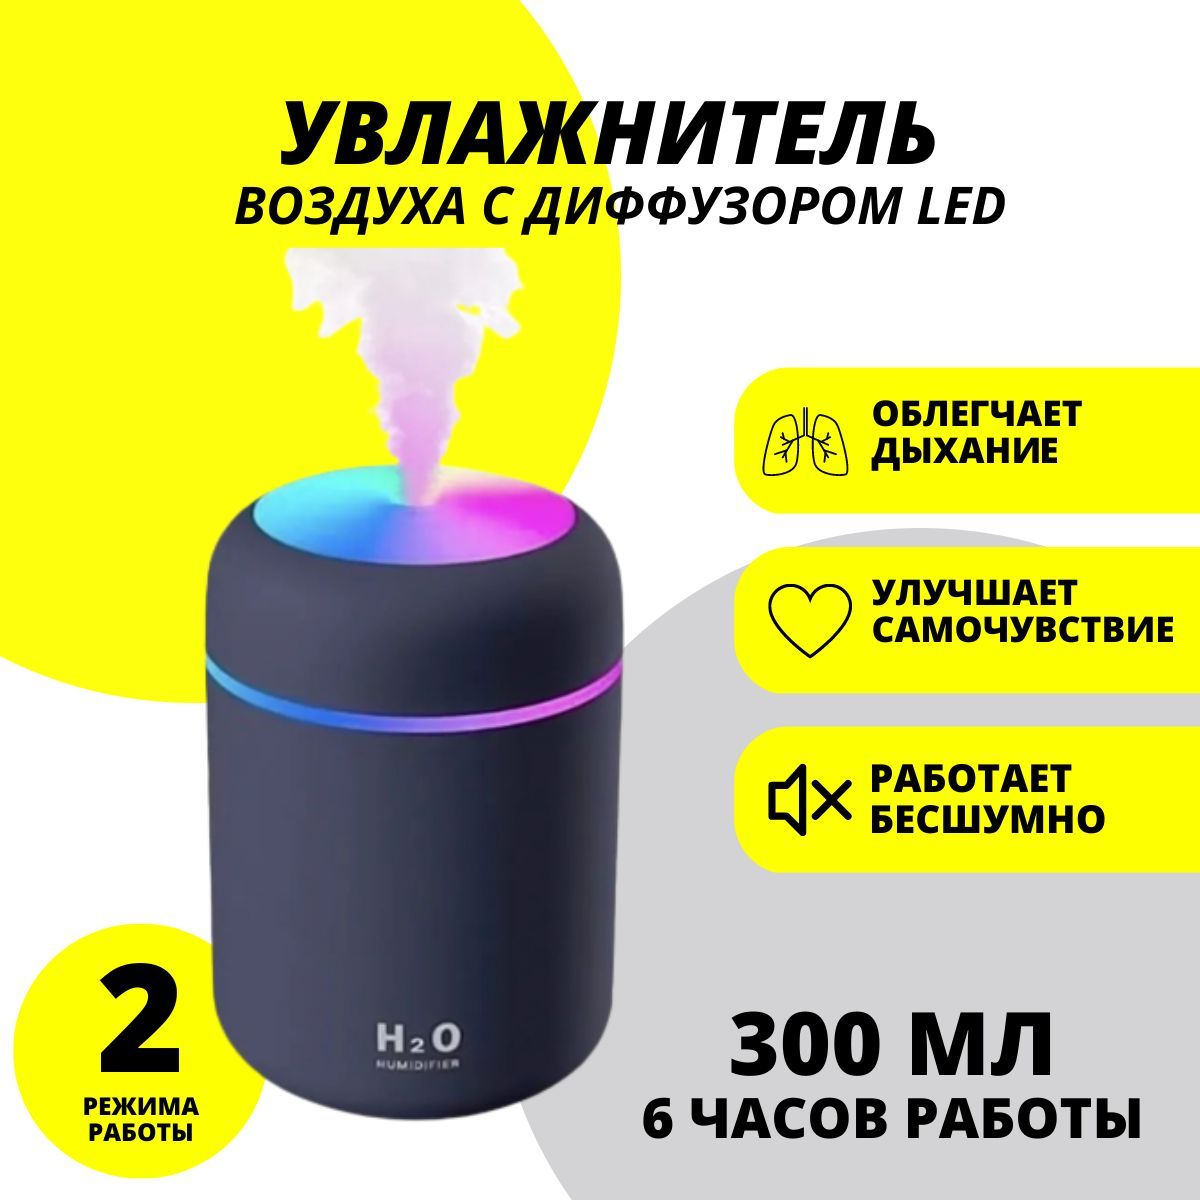 H2o Humidifier. Colorful Egg Humidifier. Humidifier h2o коробка. USB colorful Humidifier сверху. Colorful humidifier инструкция